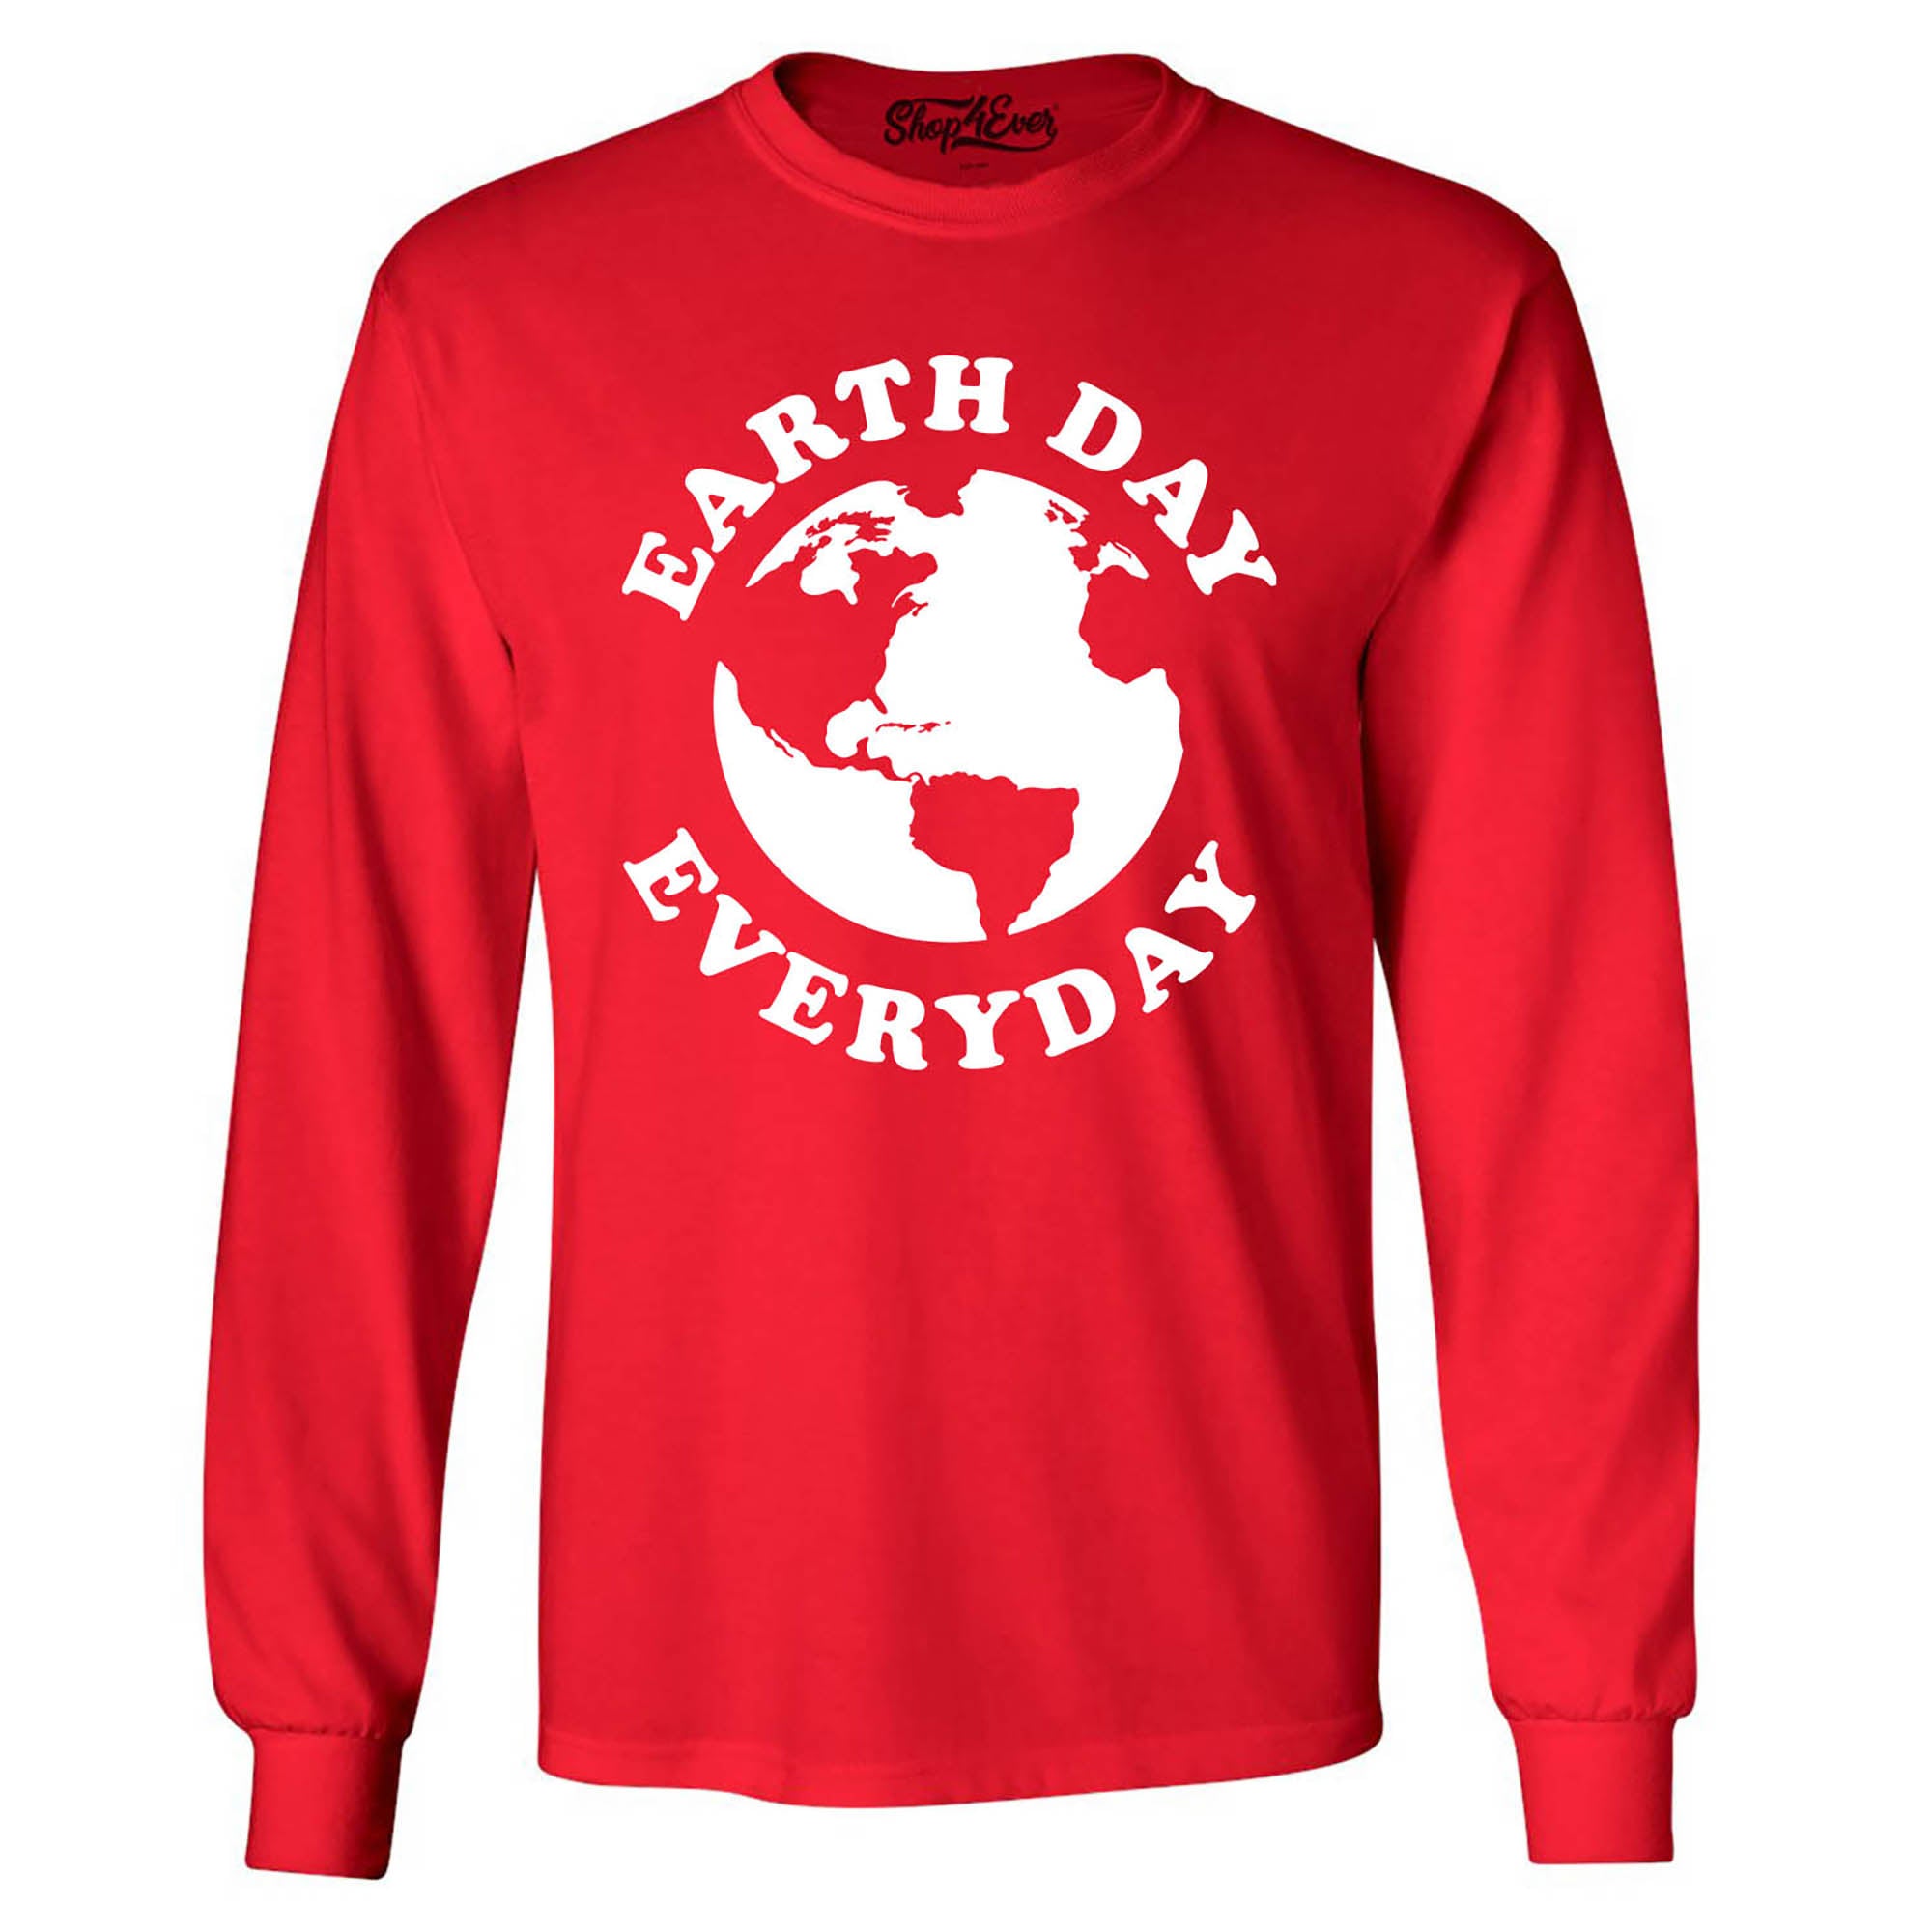 Earth Day Everyday Long Sleeve Shirt